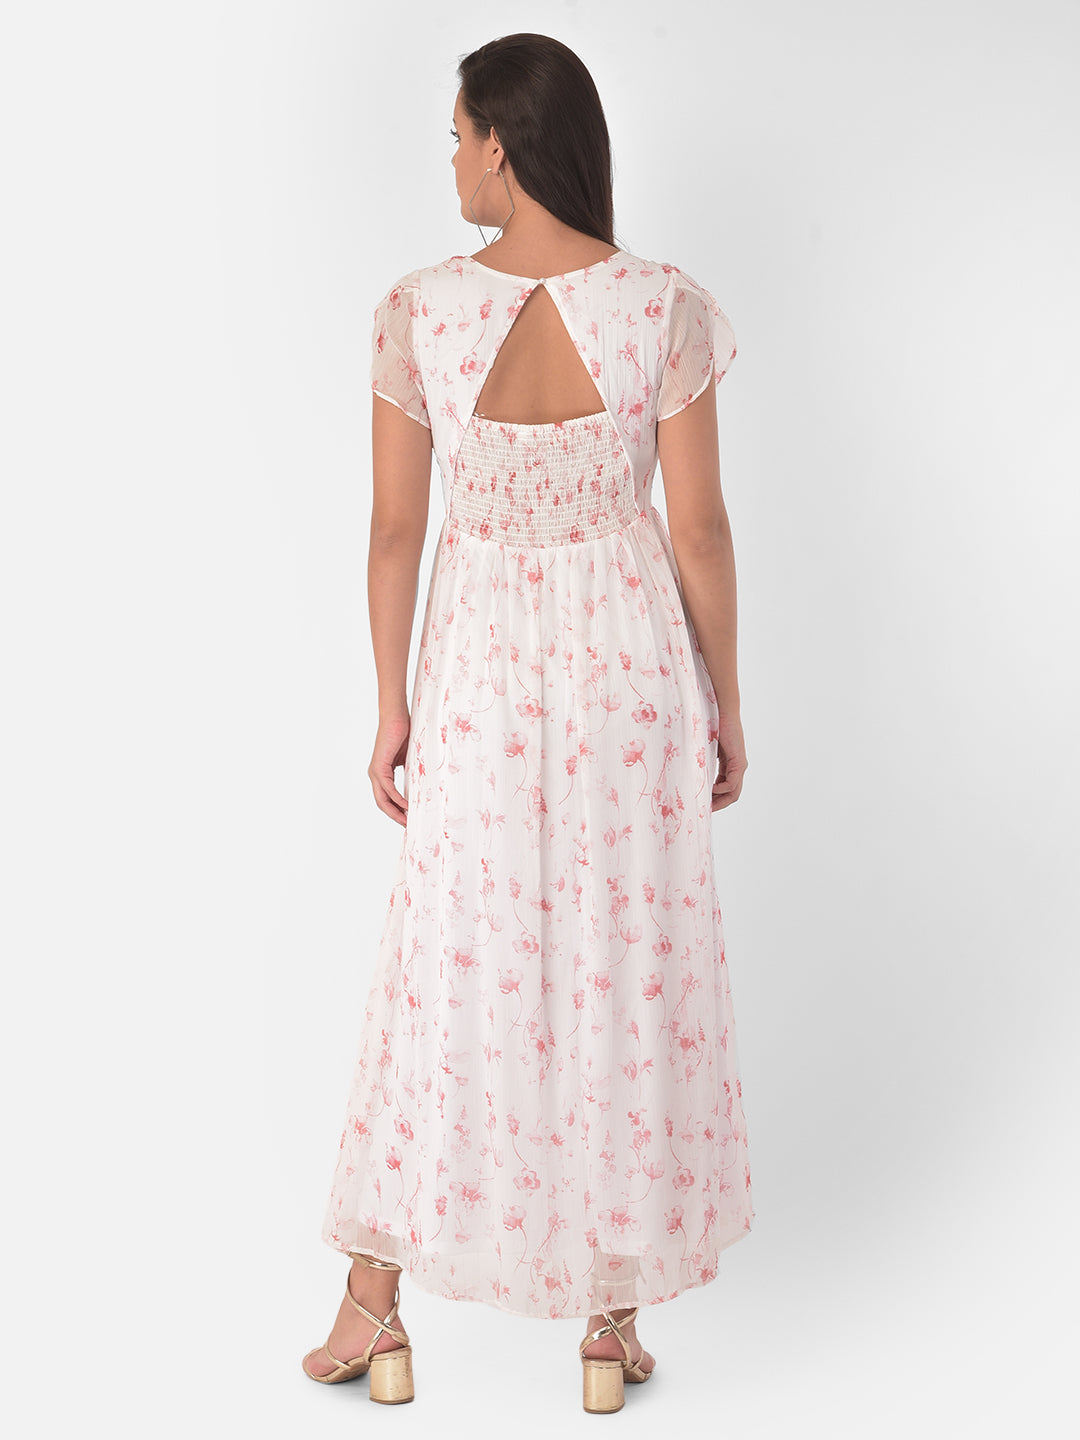 Pink Cap Sleeve Maxi Floral Dress